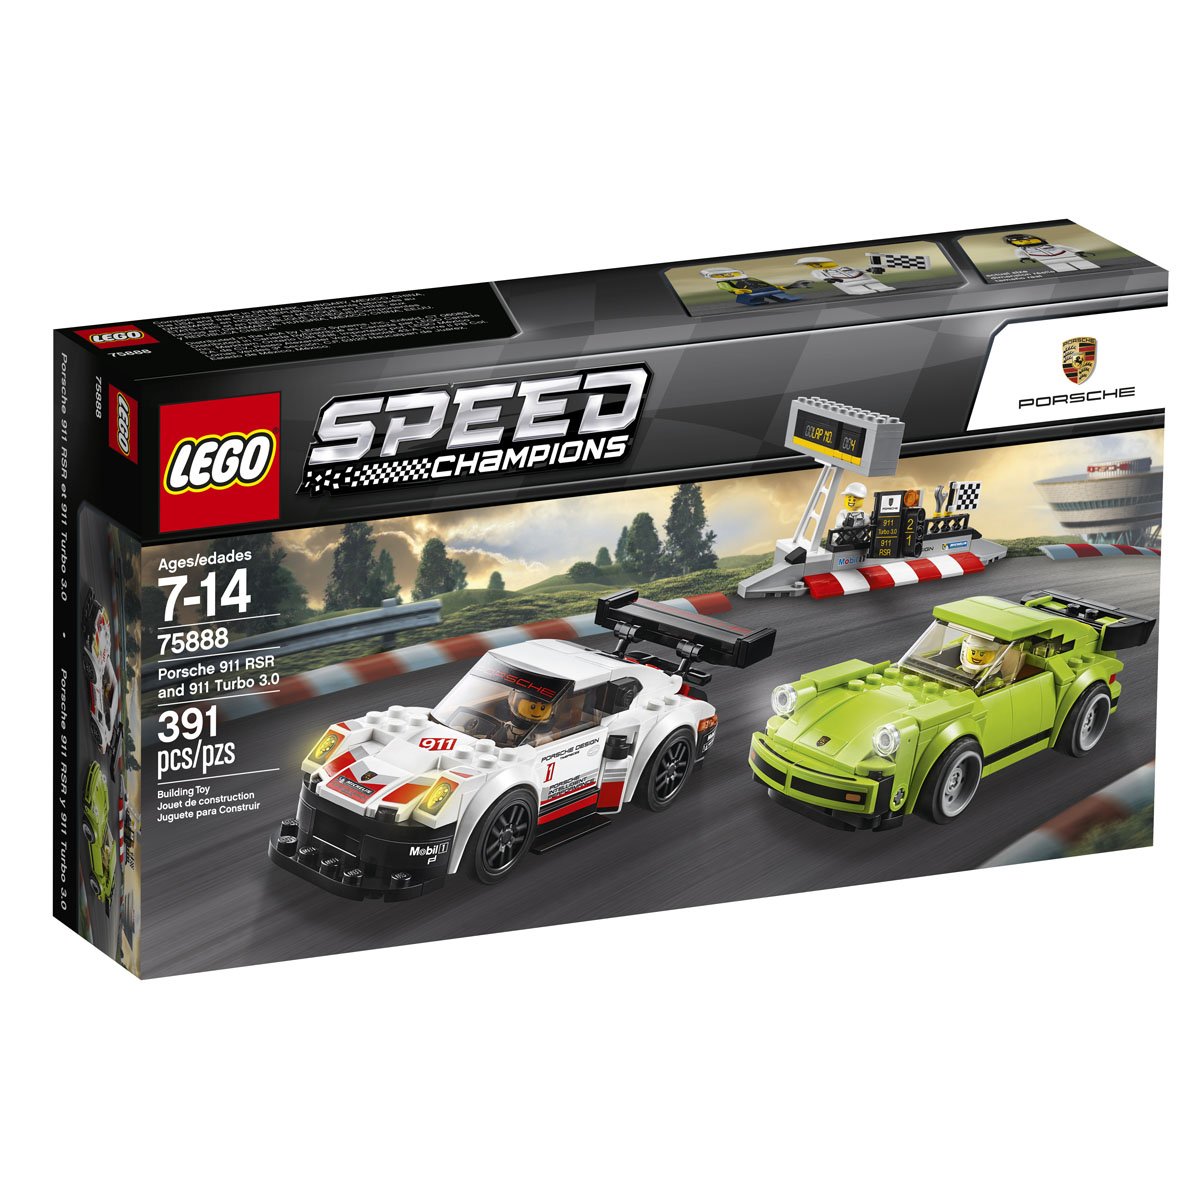 Porsche 911 Rsr &amp; 911 Turbo 3 0 Lego